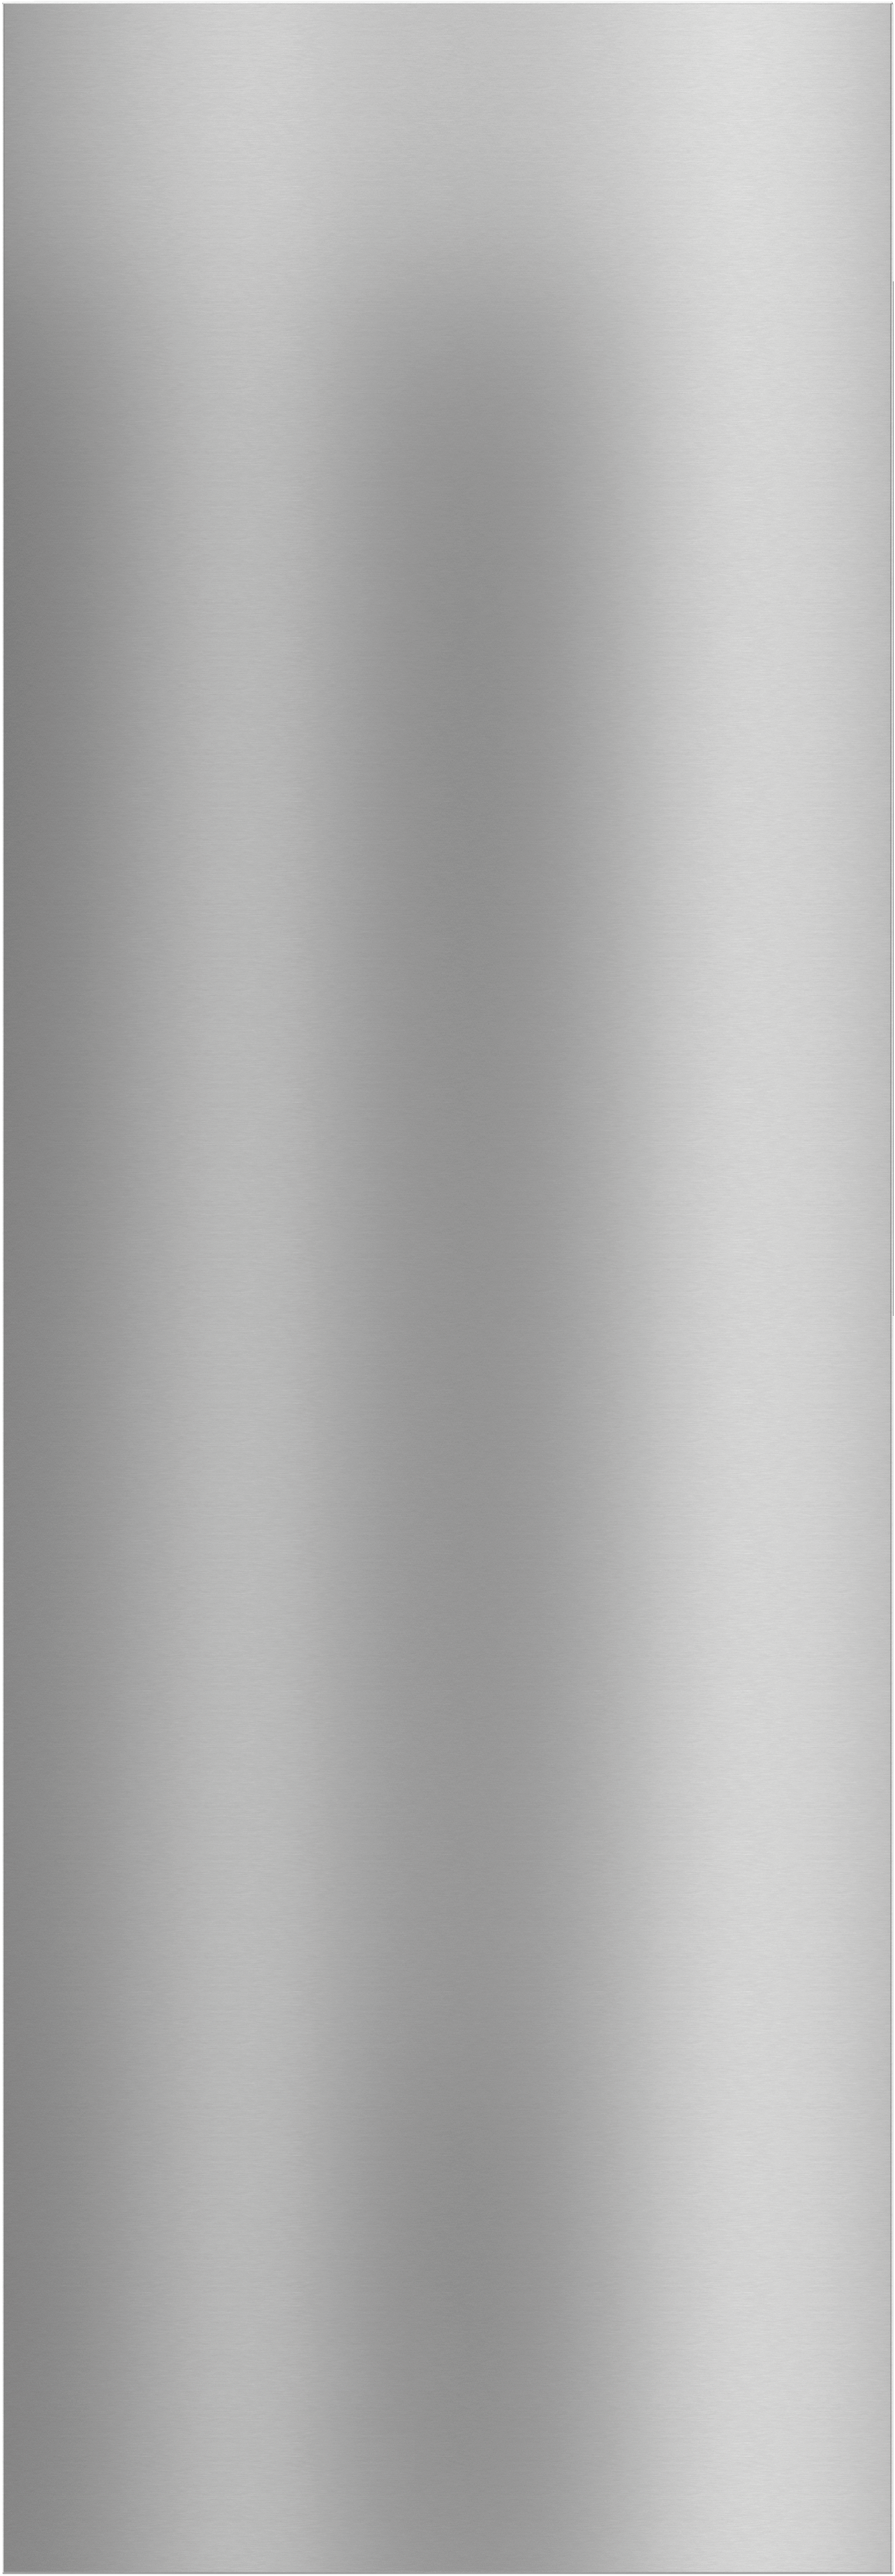 Réfrigérateurs/congélateurs - KFP 3635 ed/cs - 1